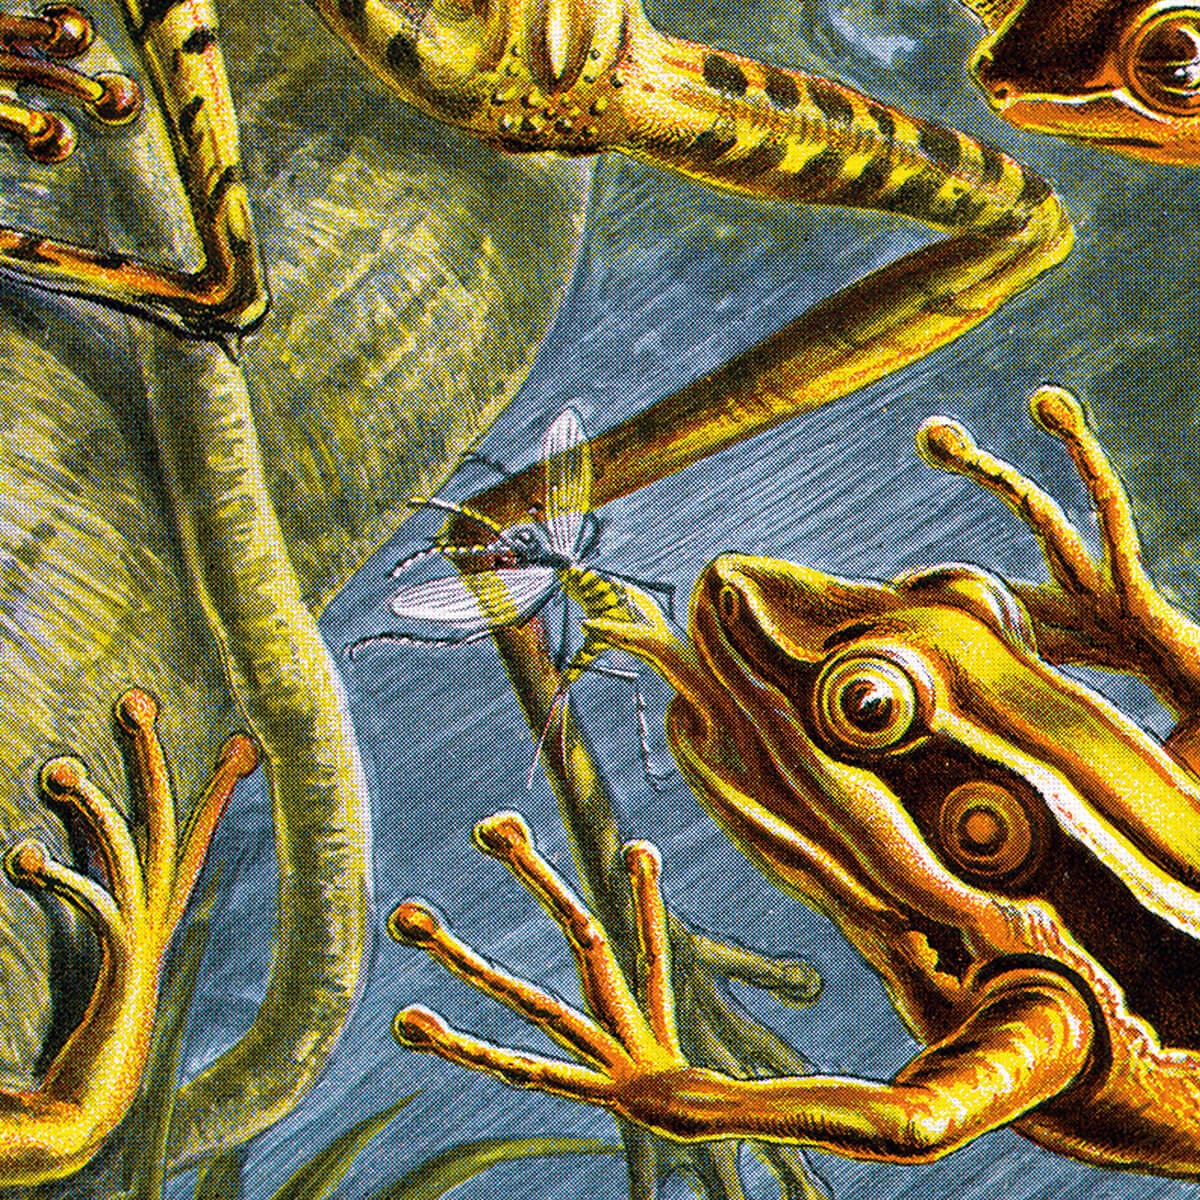 Batrachia - Frogs